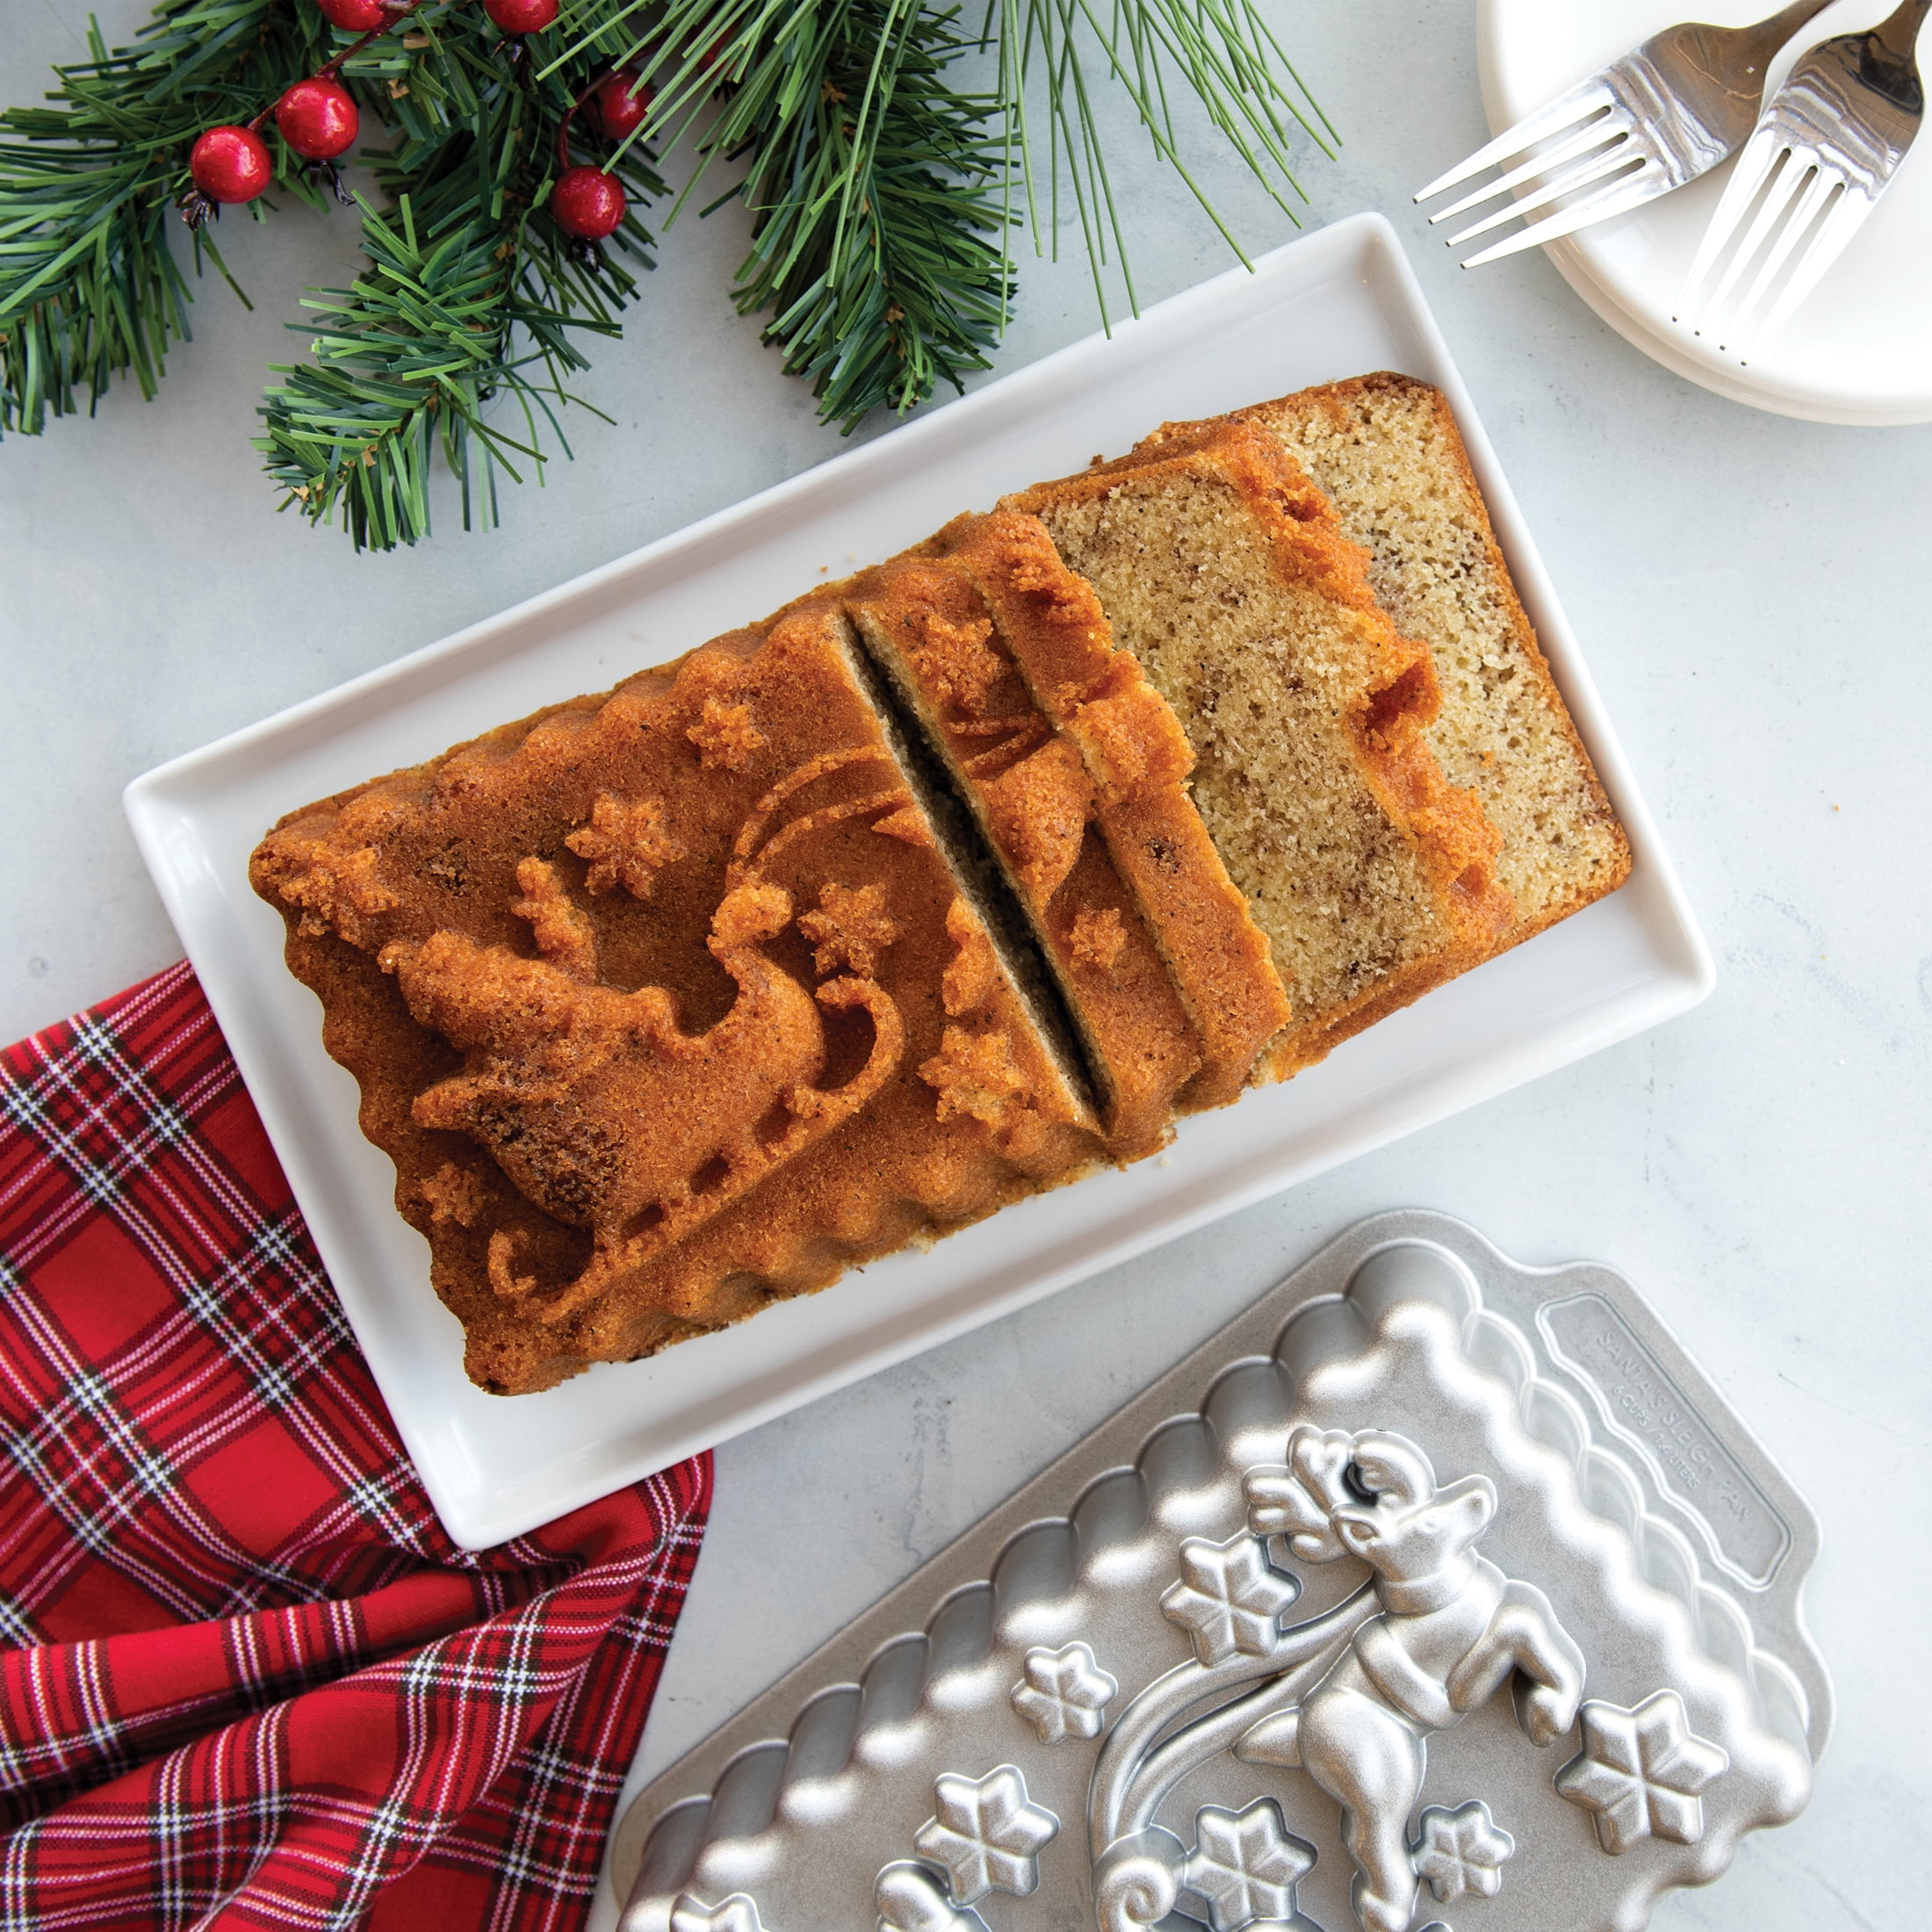 Nordic Ware Holiday Party Baking Mini Loaf Bread Pan Fun Christmas